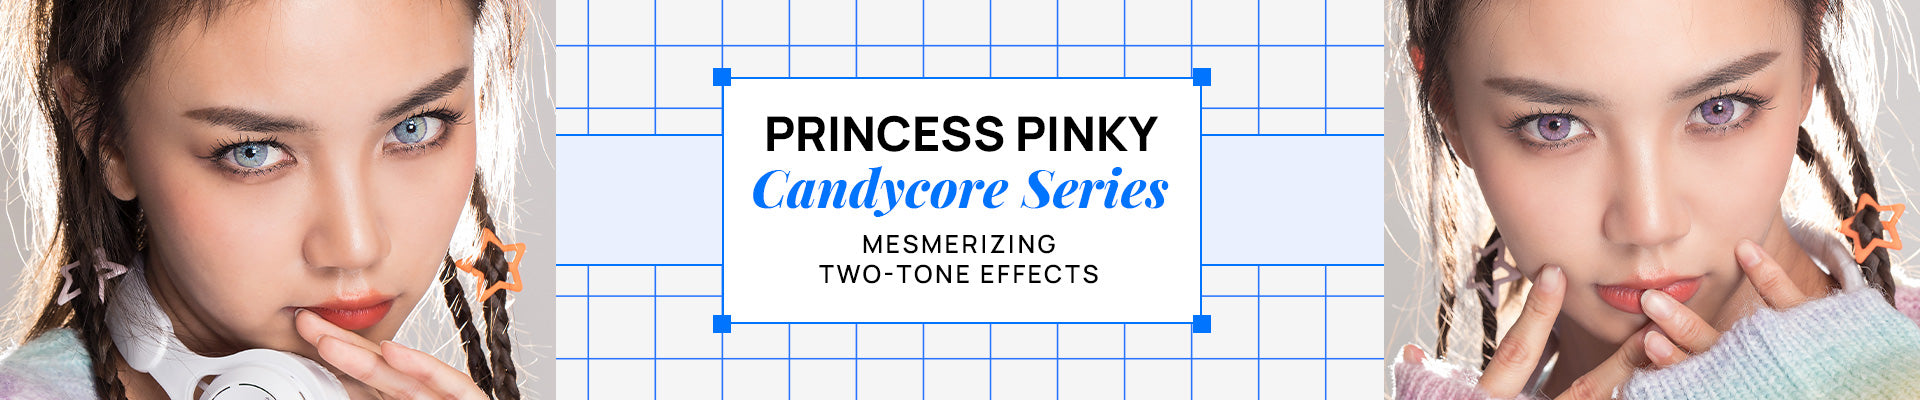 Princess Pinky Candycore Series